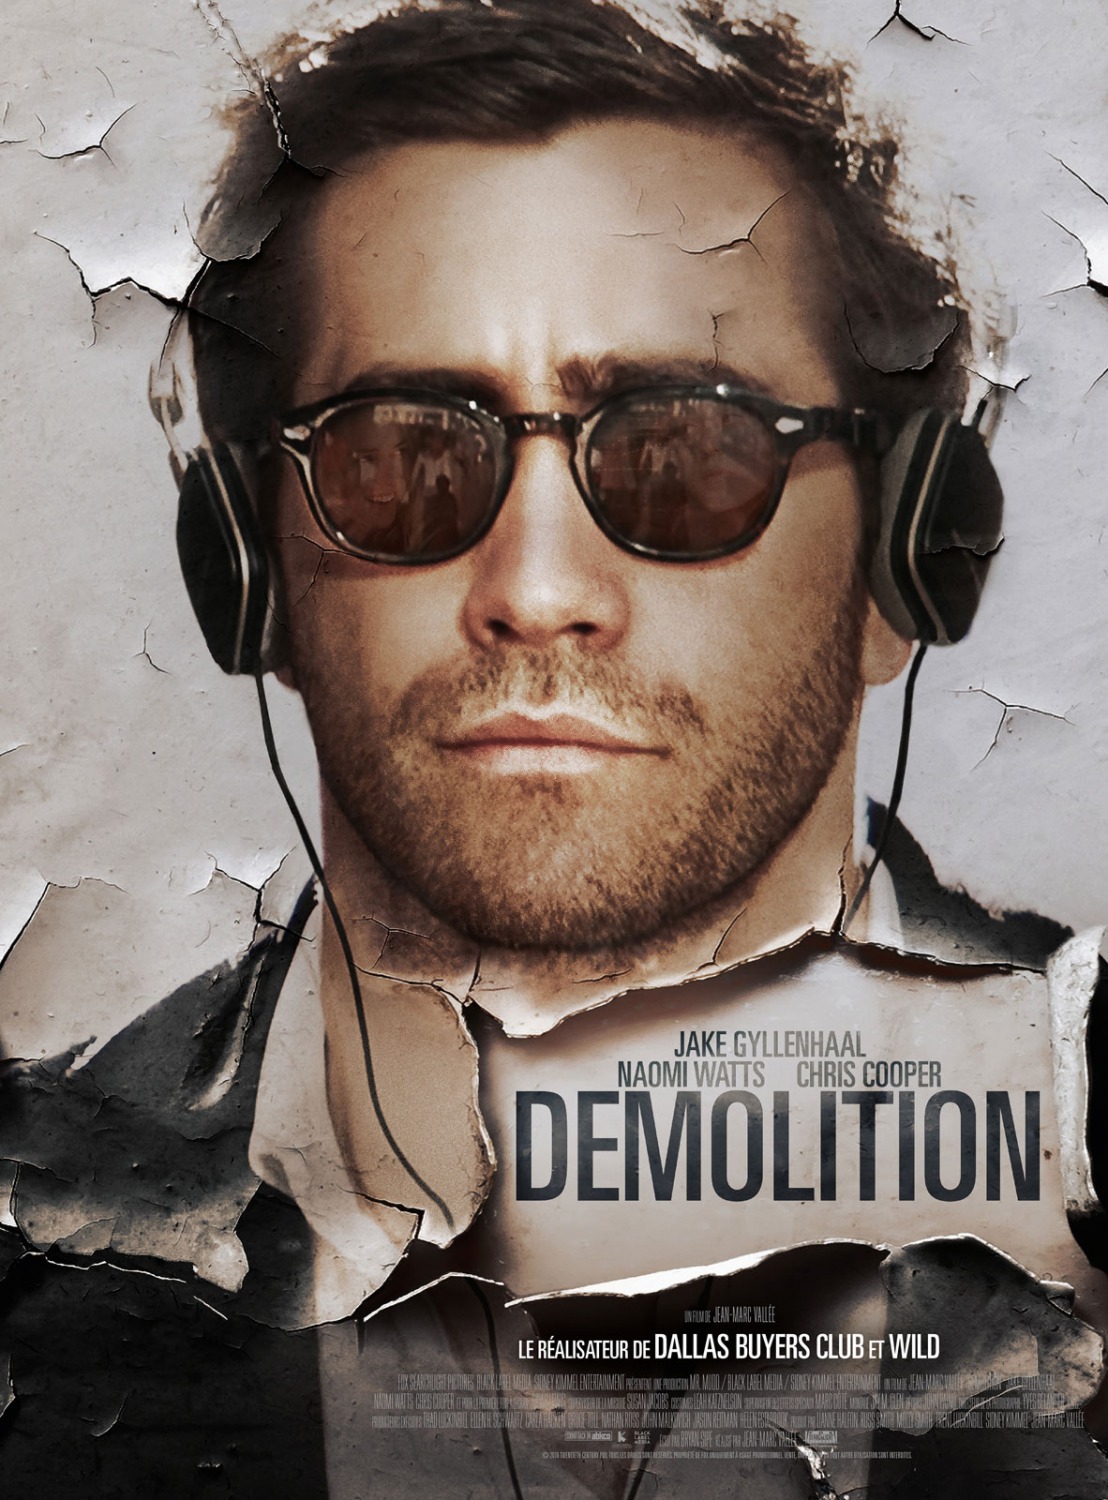 Demolition (2016) ขอเทใจให้อีกครั้ง Jake Gyllenhaal